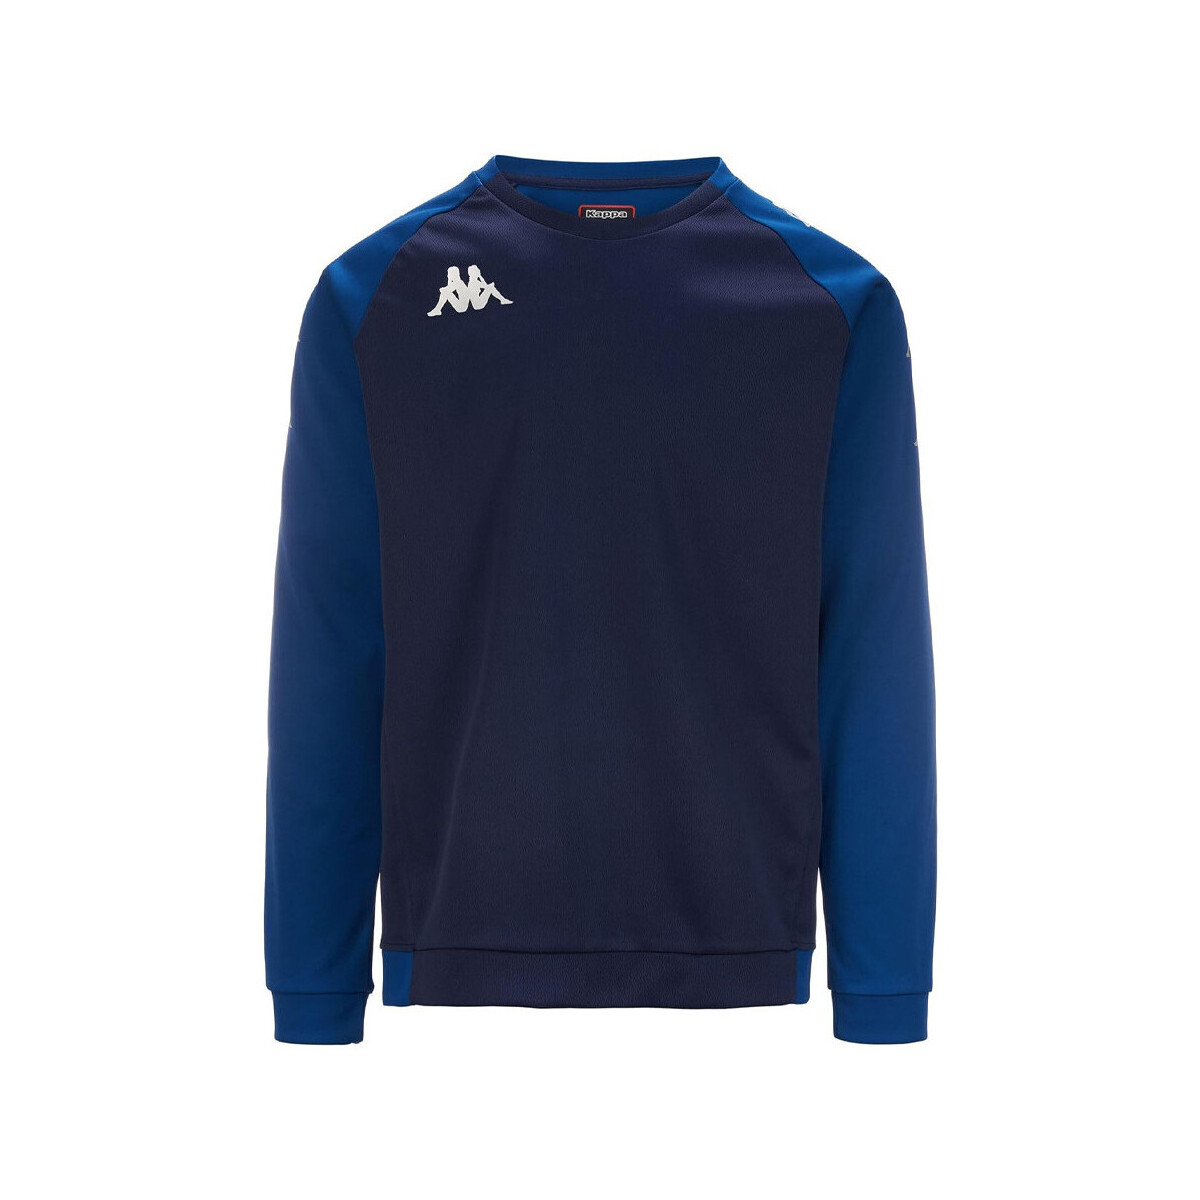 Textiel Jongens Sweaters / Sweatshirts Kappa  Blauw